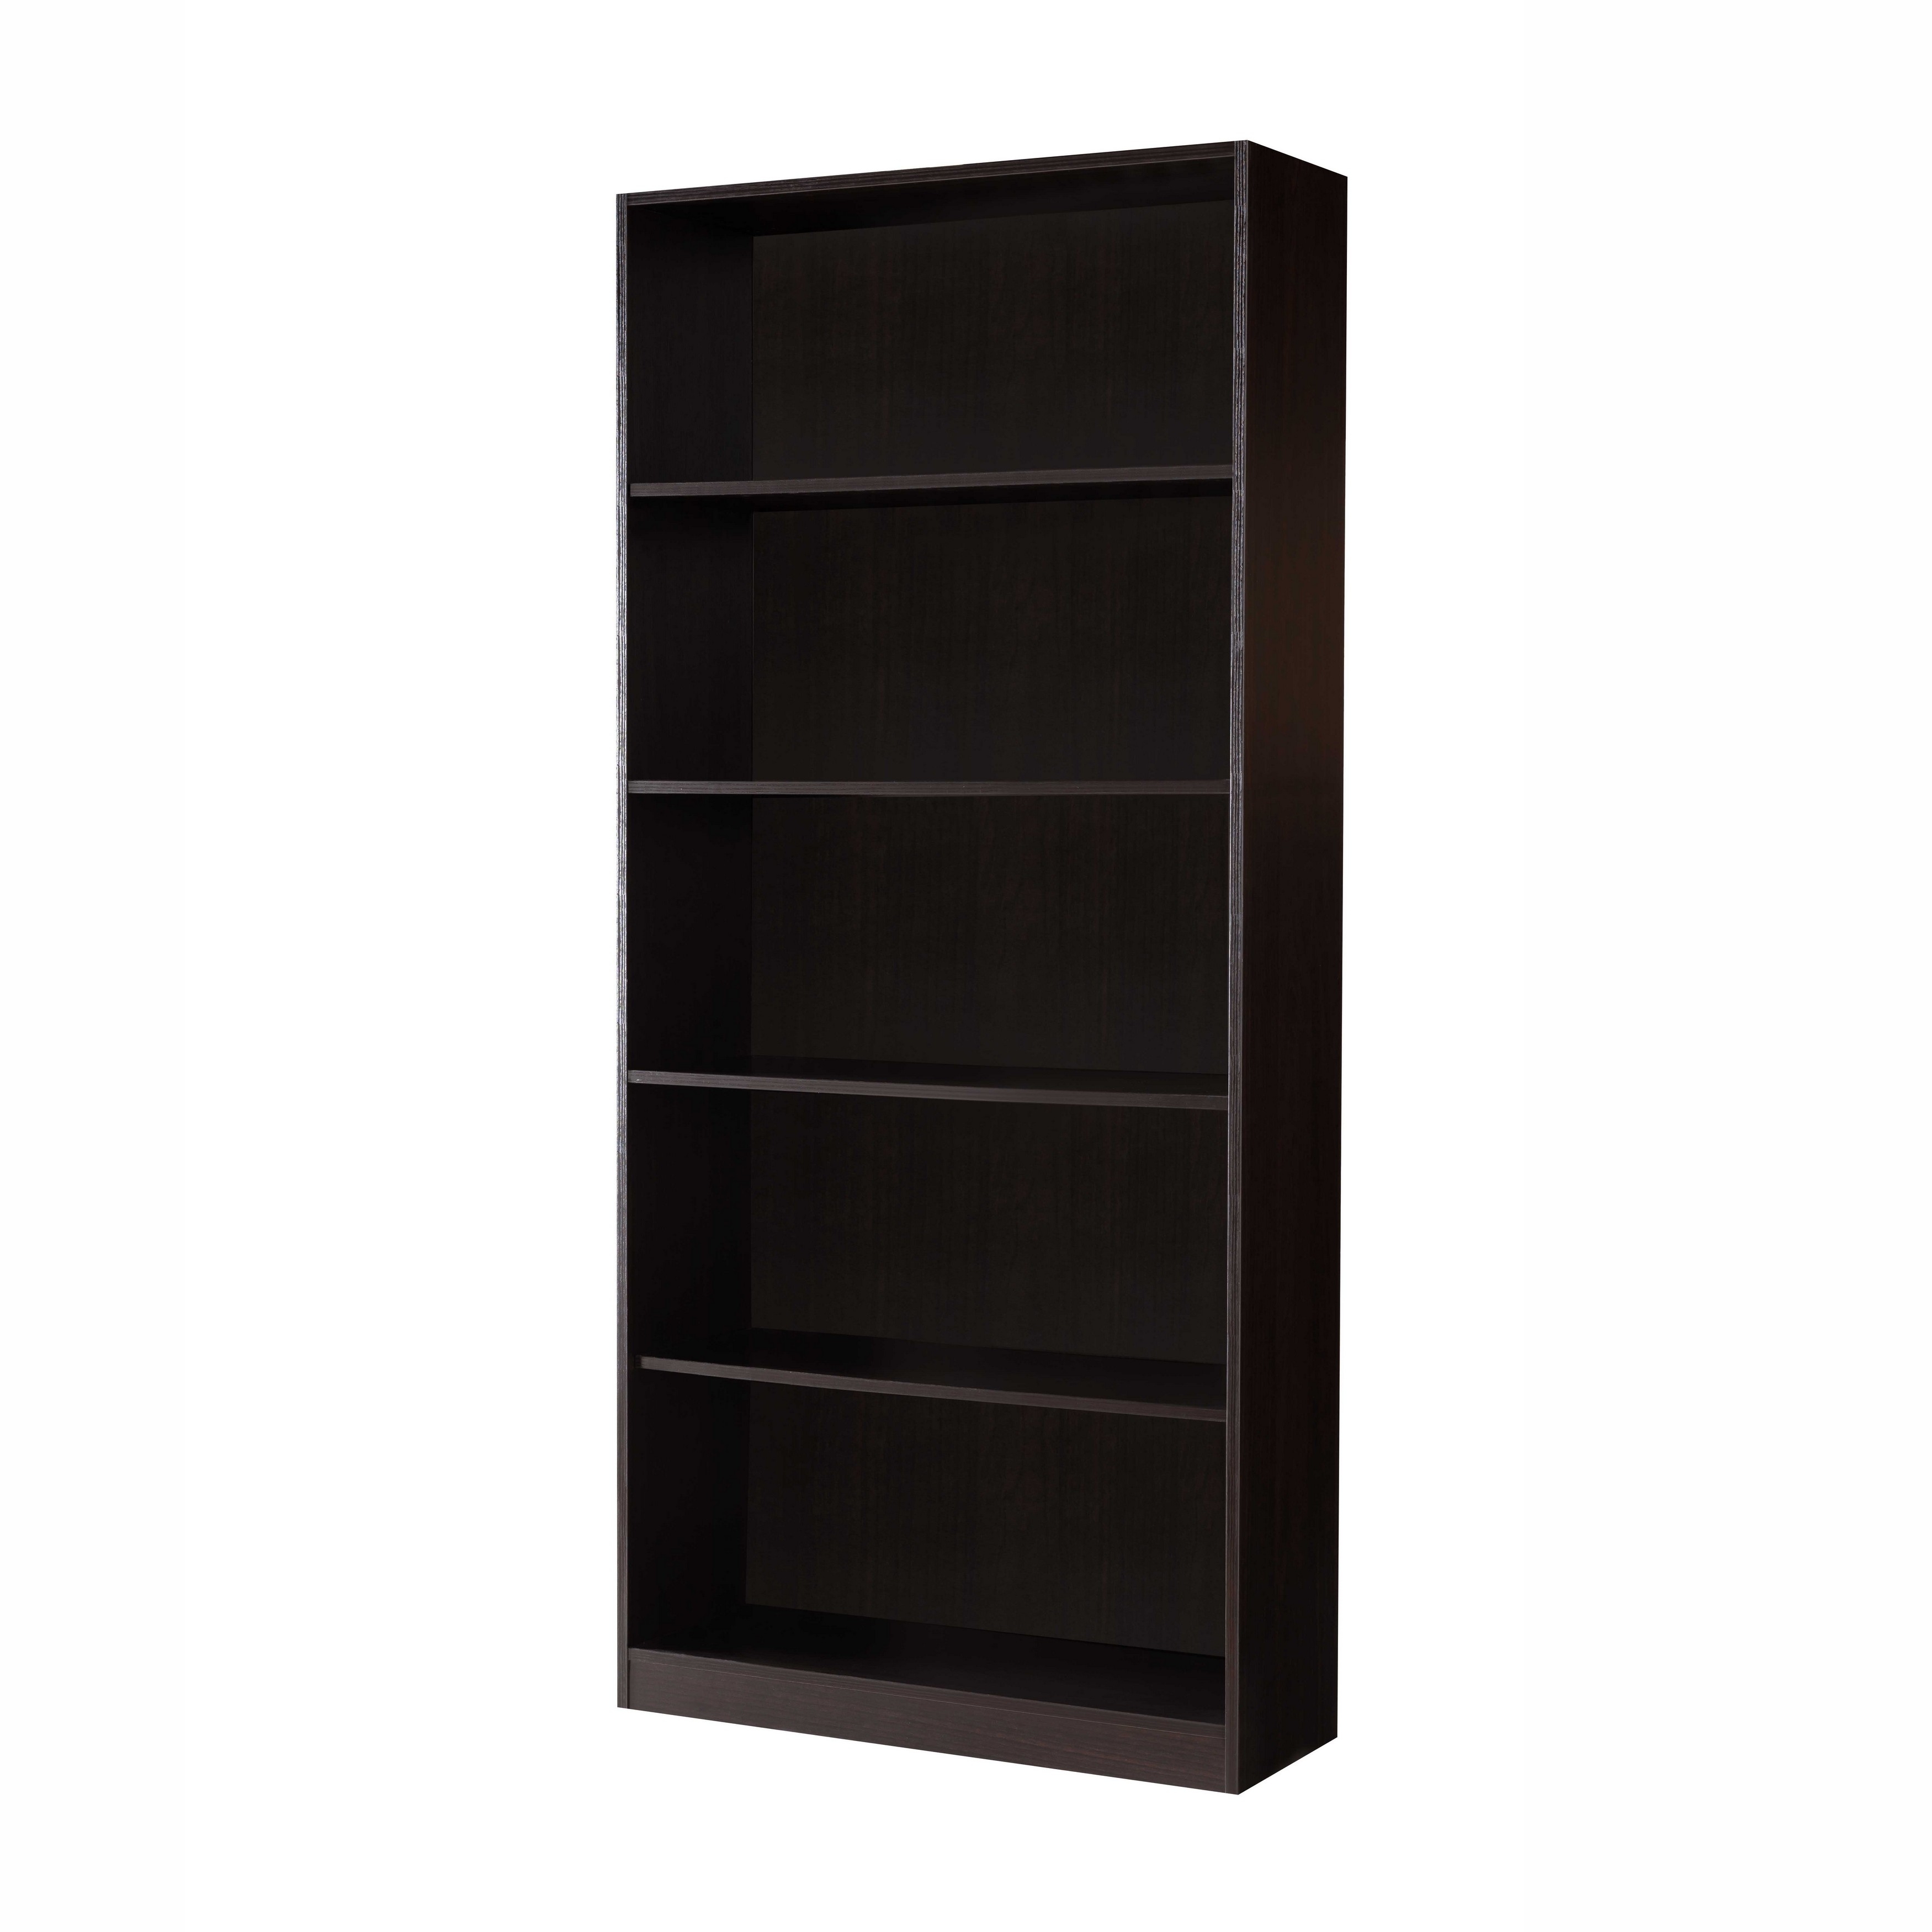 Spacious Dark Brown Finish Bookcase With 5 Open Shelves.- Saltoro Sherpi